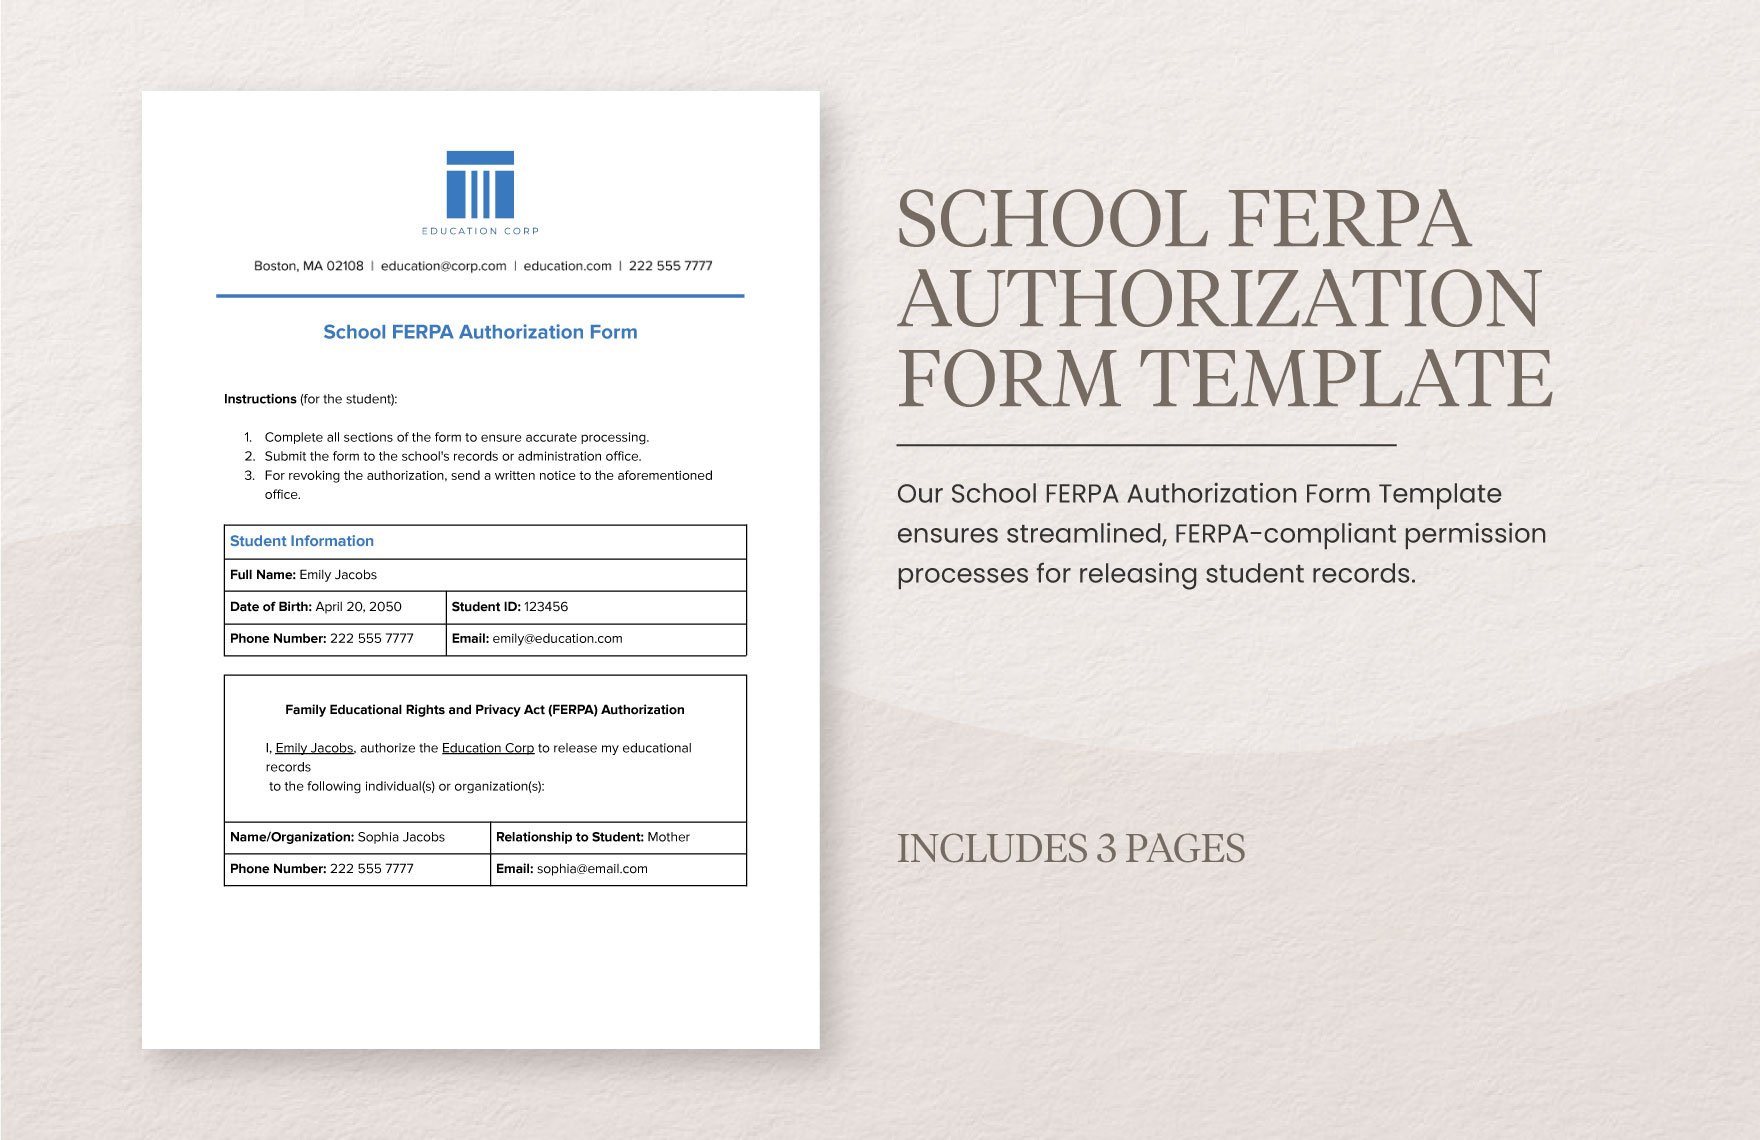 School FERPA Authorization Form Template